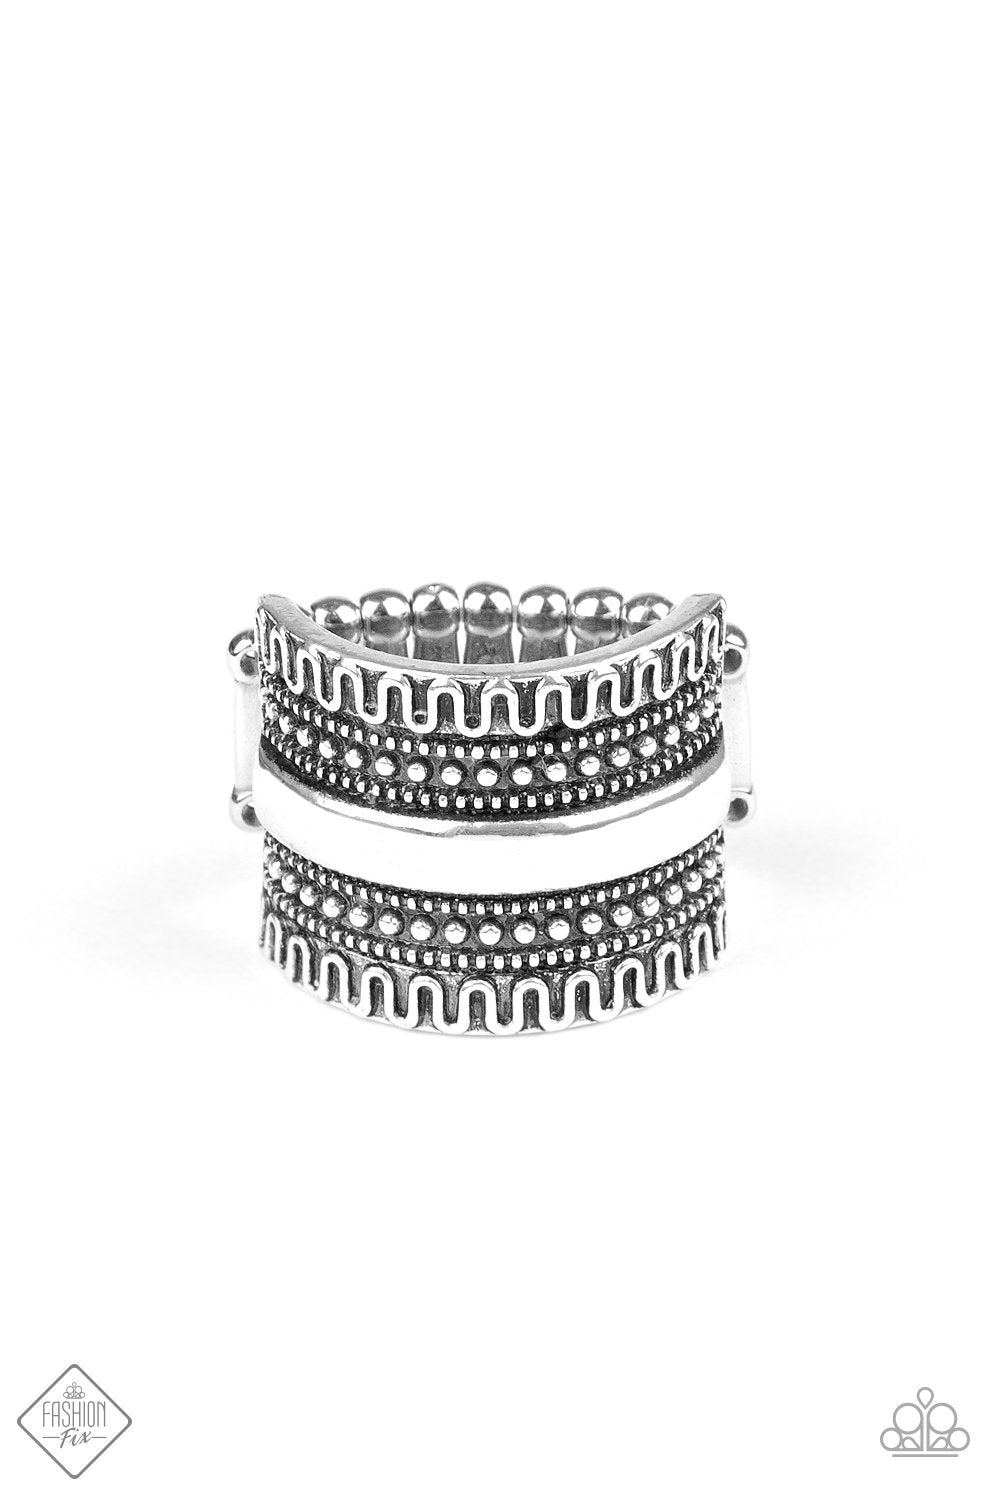 Sahara Style Silver Ring